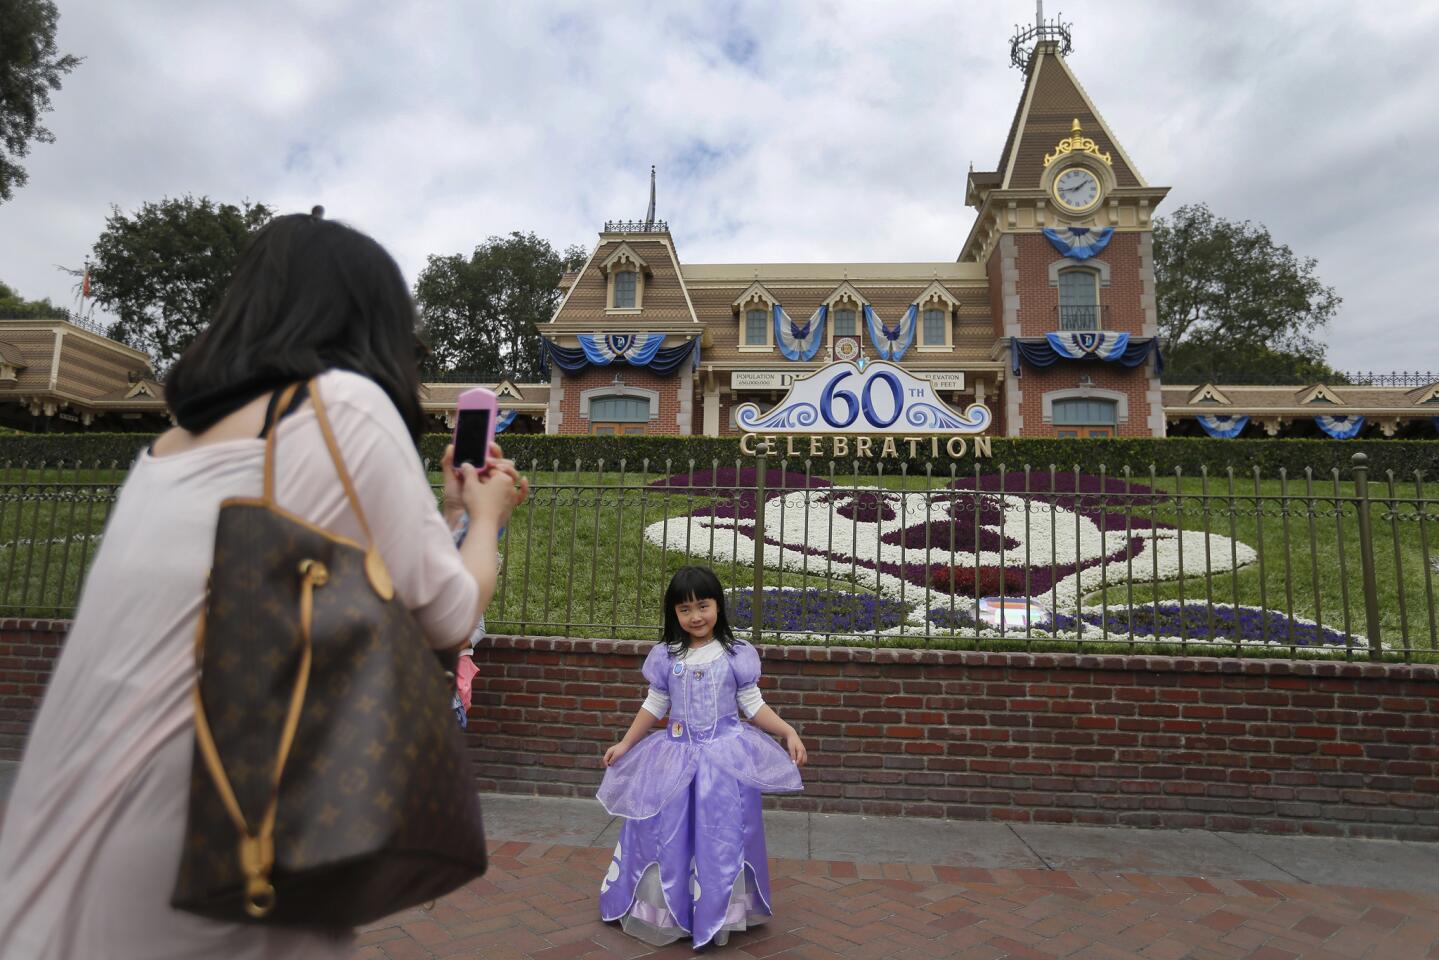 Disneyland 60th anniversary celebration